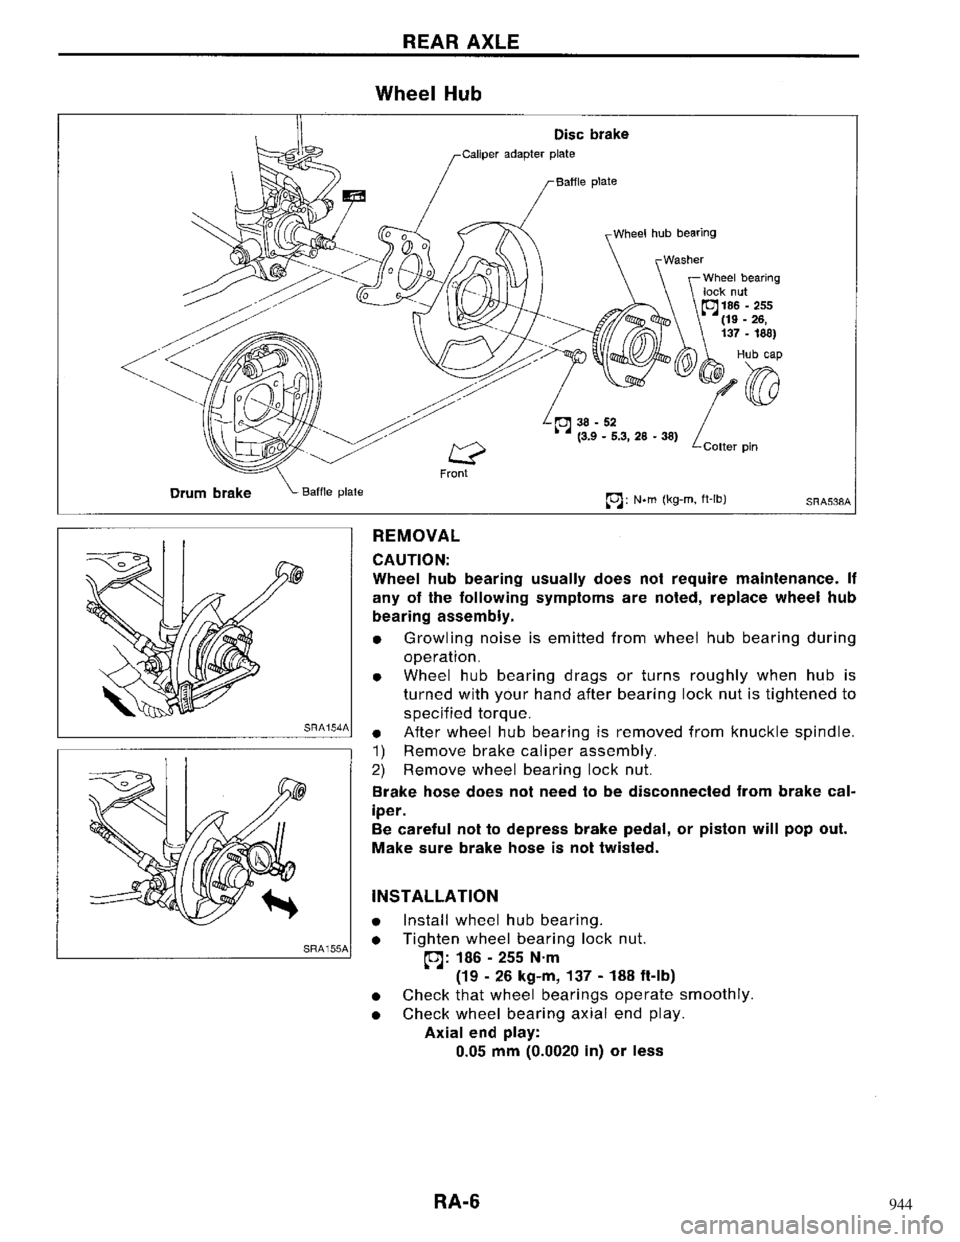 NISSAN MAXIMA 1994 A32 / 4.G Rear Axle Workshop Manual 944 